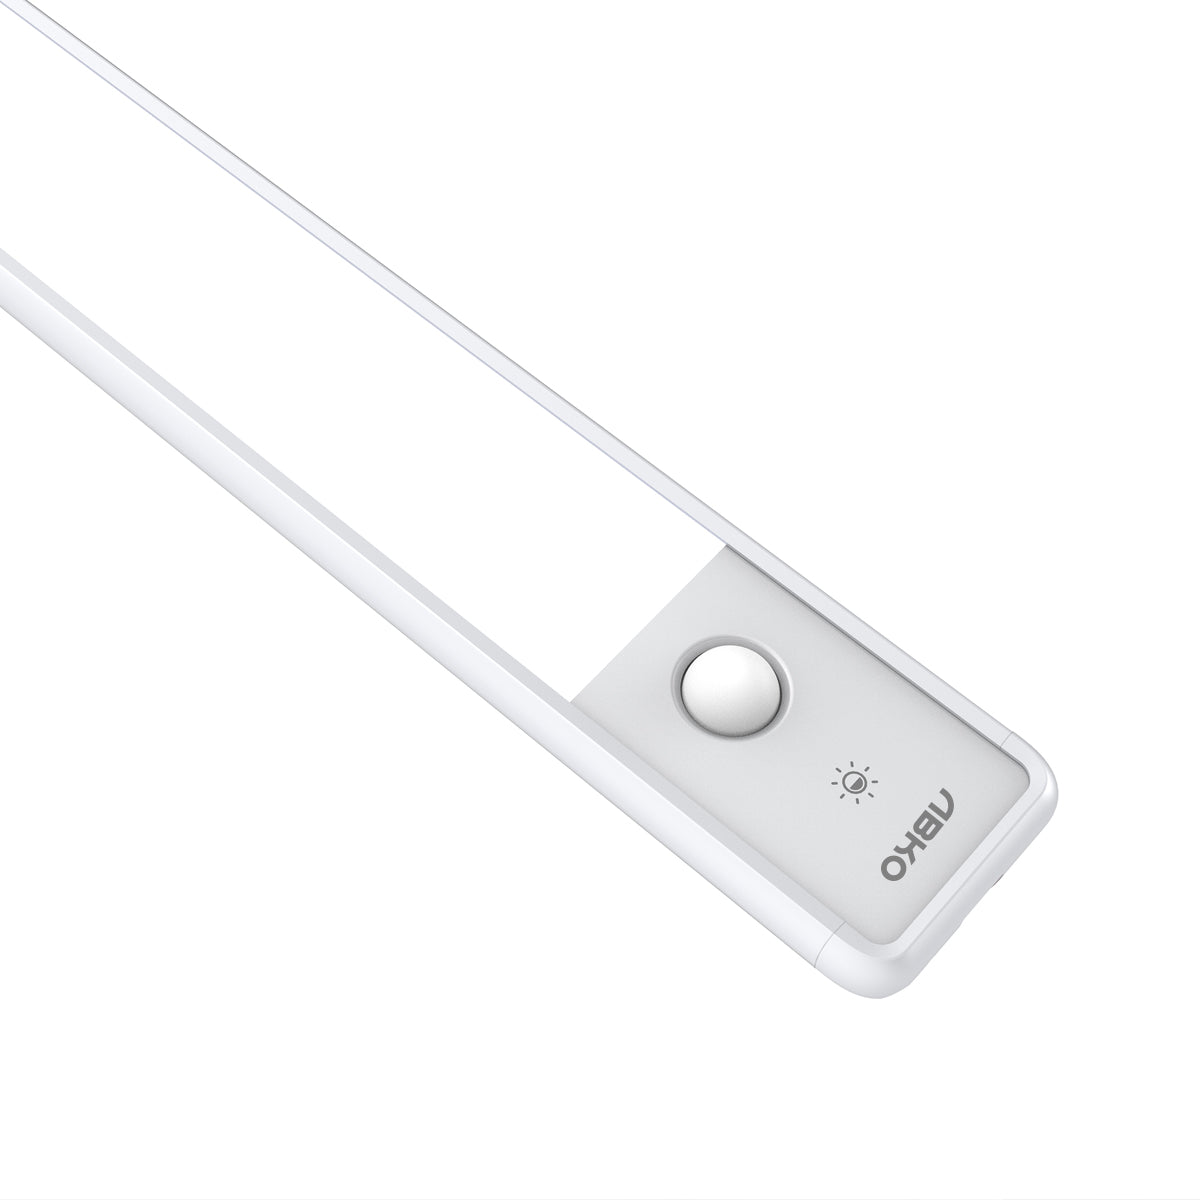 韓國 ABKO LB03 LED Cordless Motion Sensor Light 30cm 智能感光 / 輕觸按鍵 / 定時 / 充電